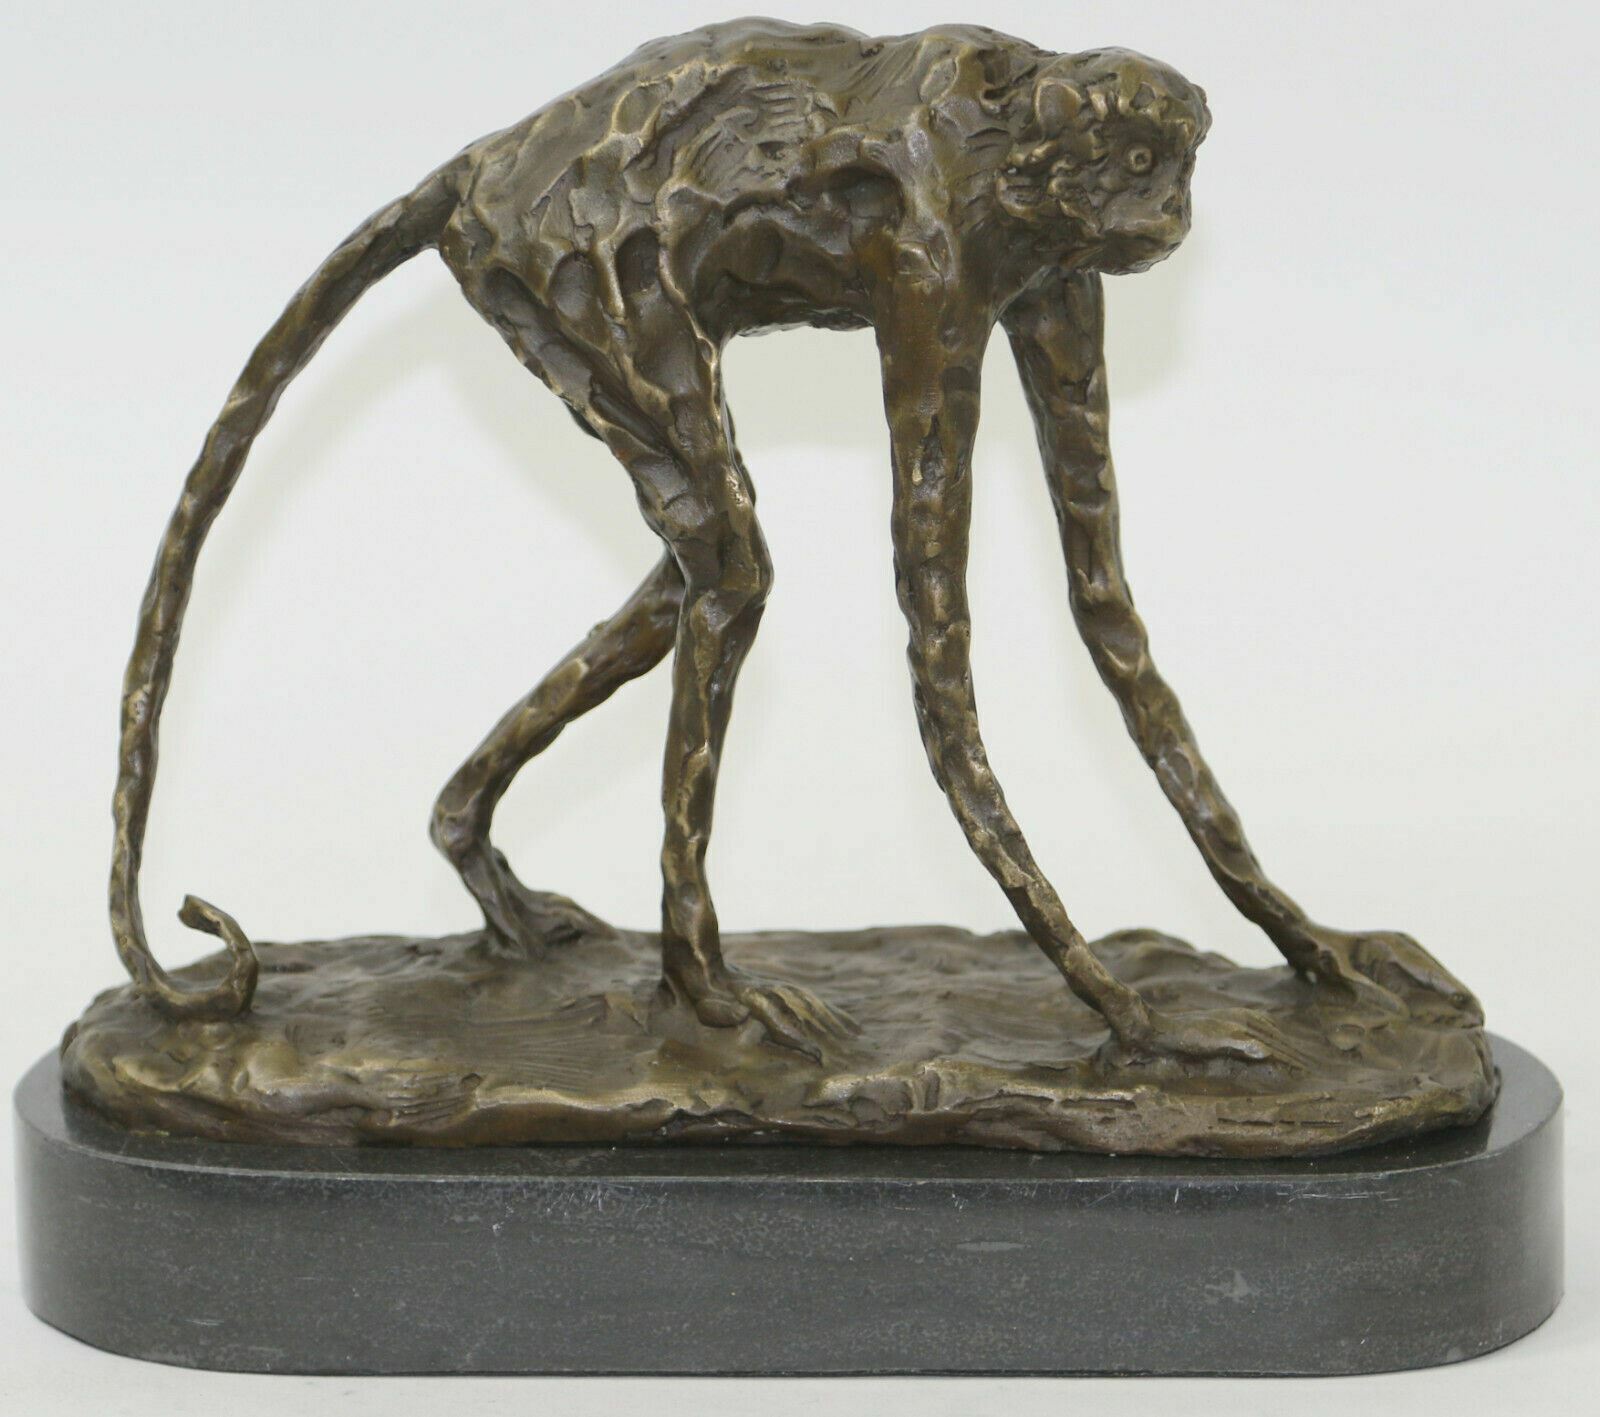 Very Nice Vintage Signed Milo Original Bronze Monkey Sculpture Lost Wax Figurine